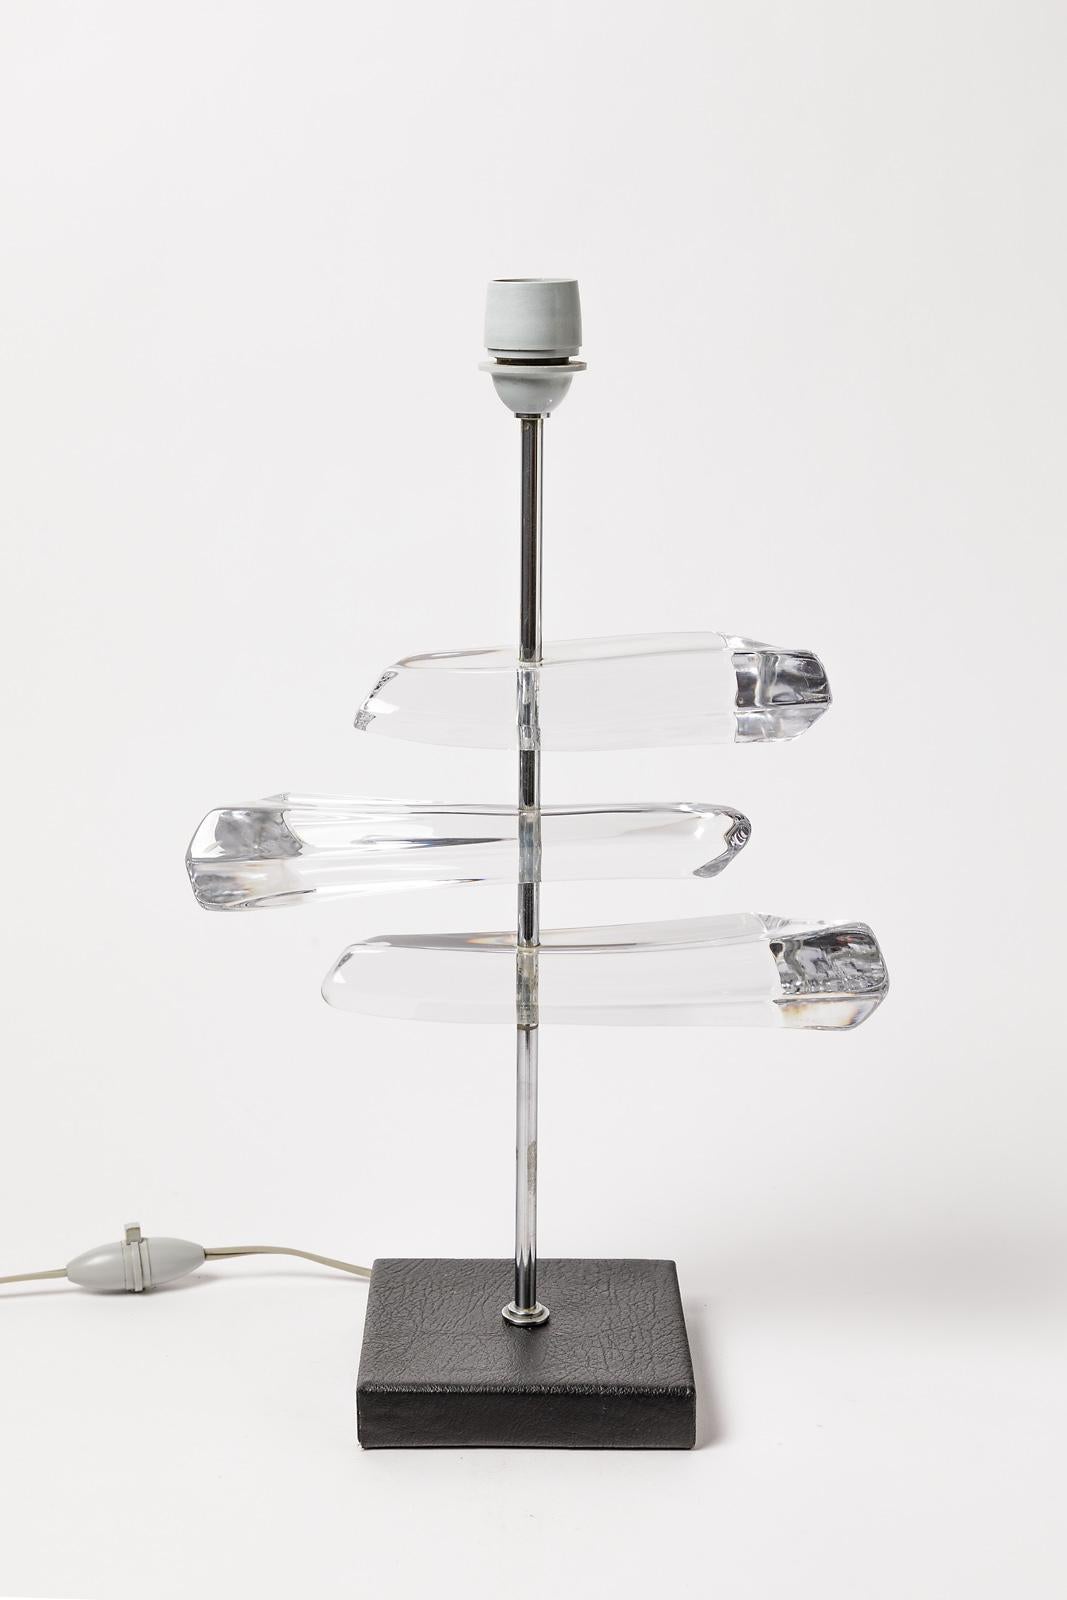 Art Glass Daum France Sculptural Glass Table Lamp Mid-20th Century Design